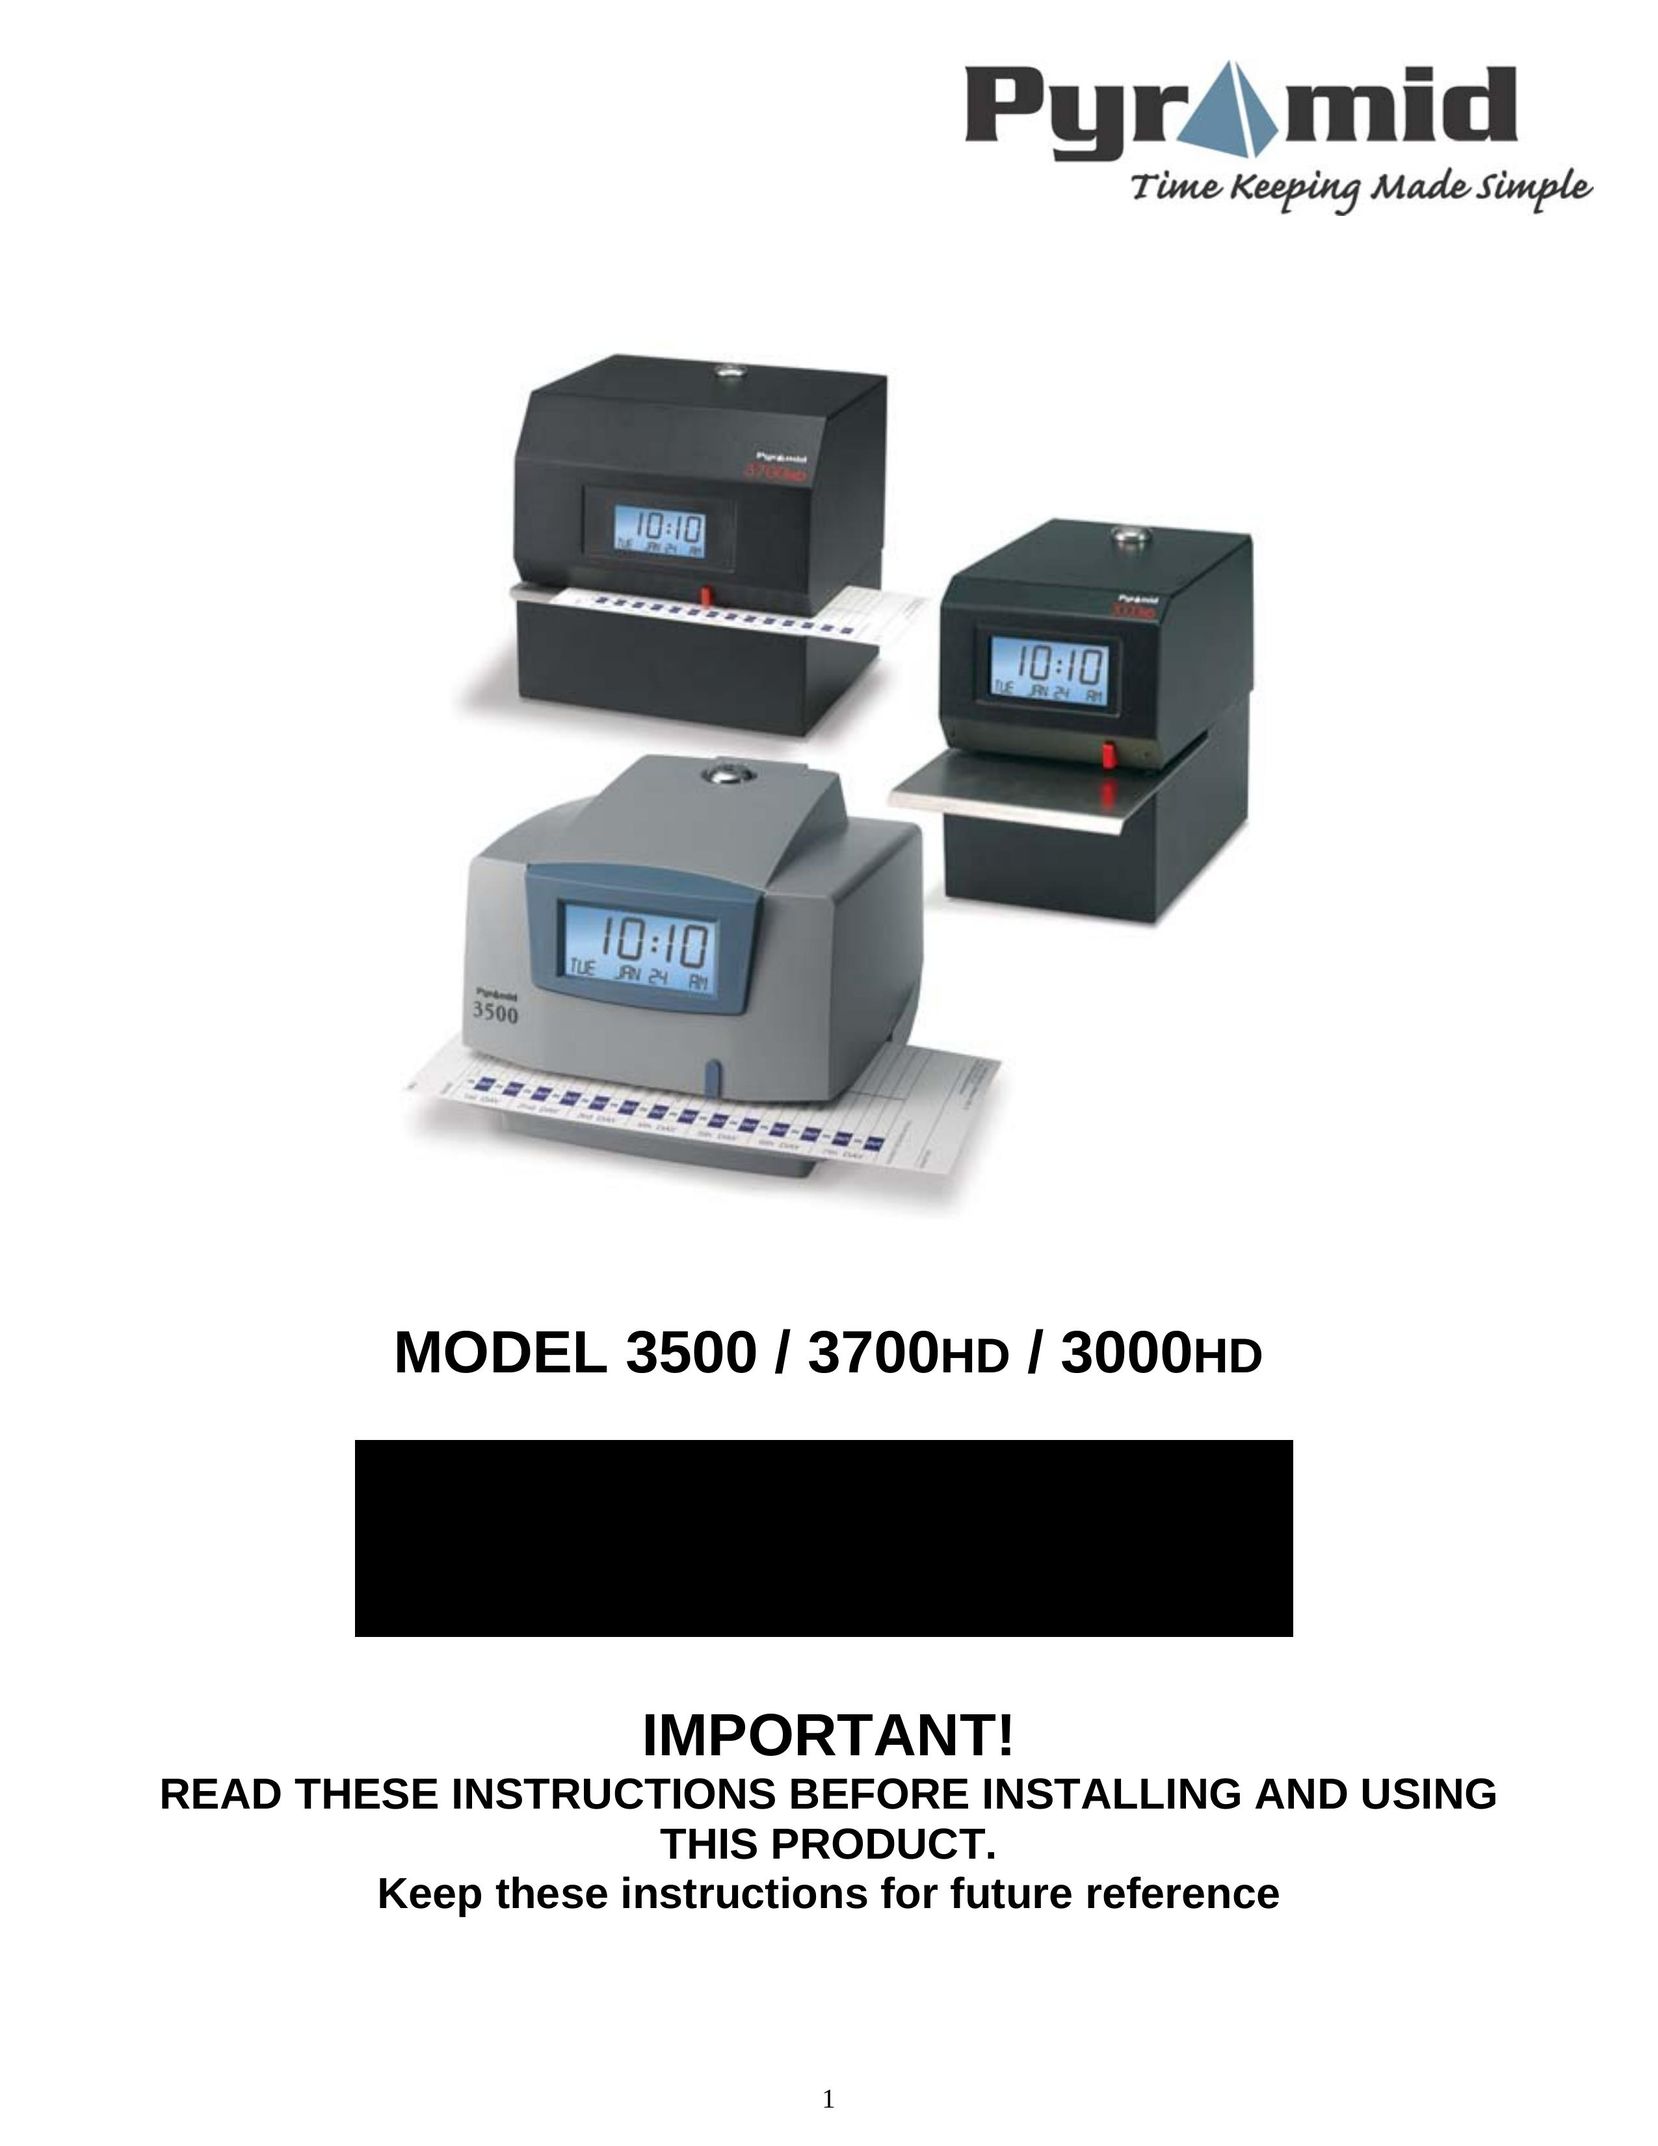 Pyramid Technologies 3700HD Time Clock User Manual